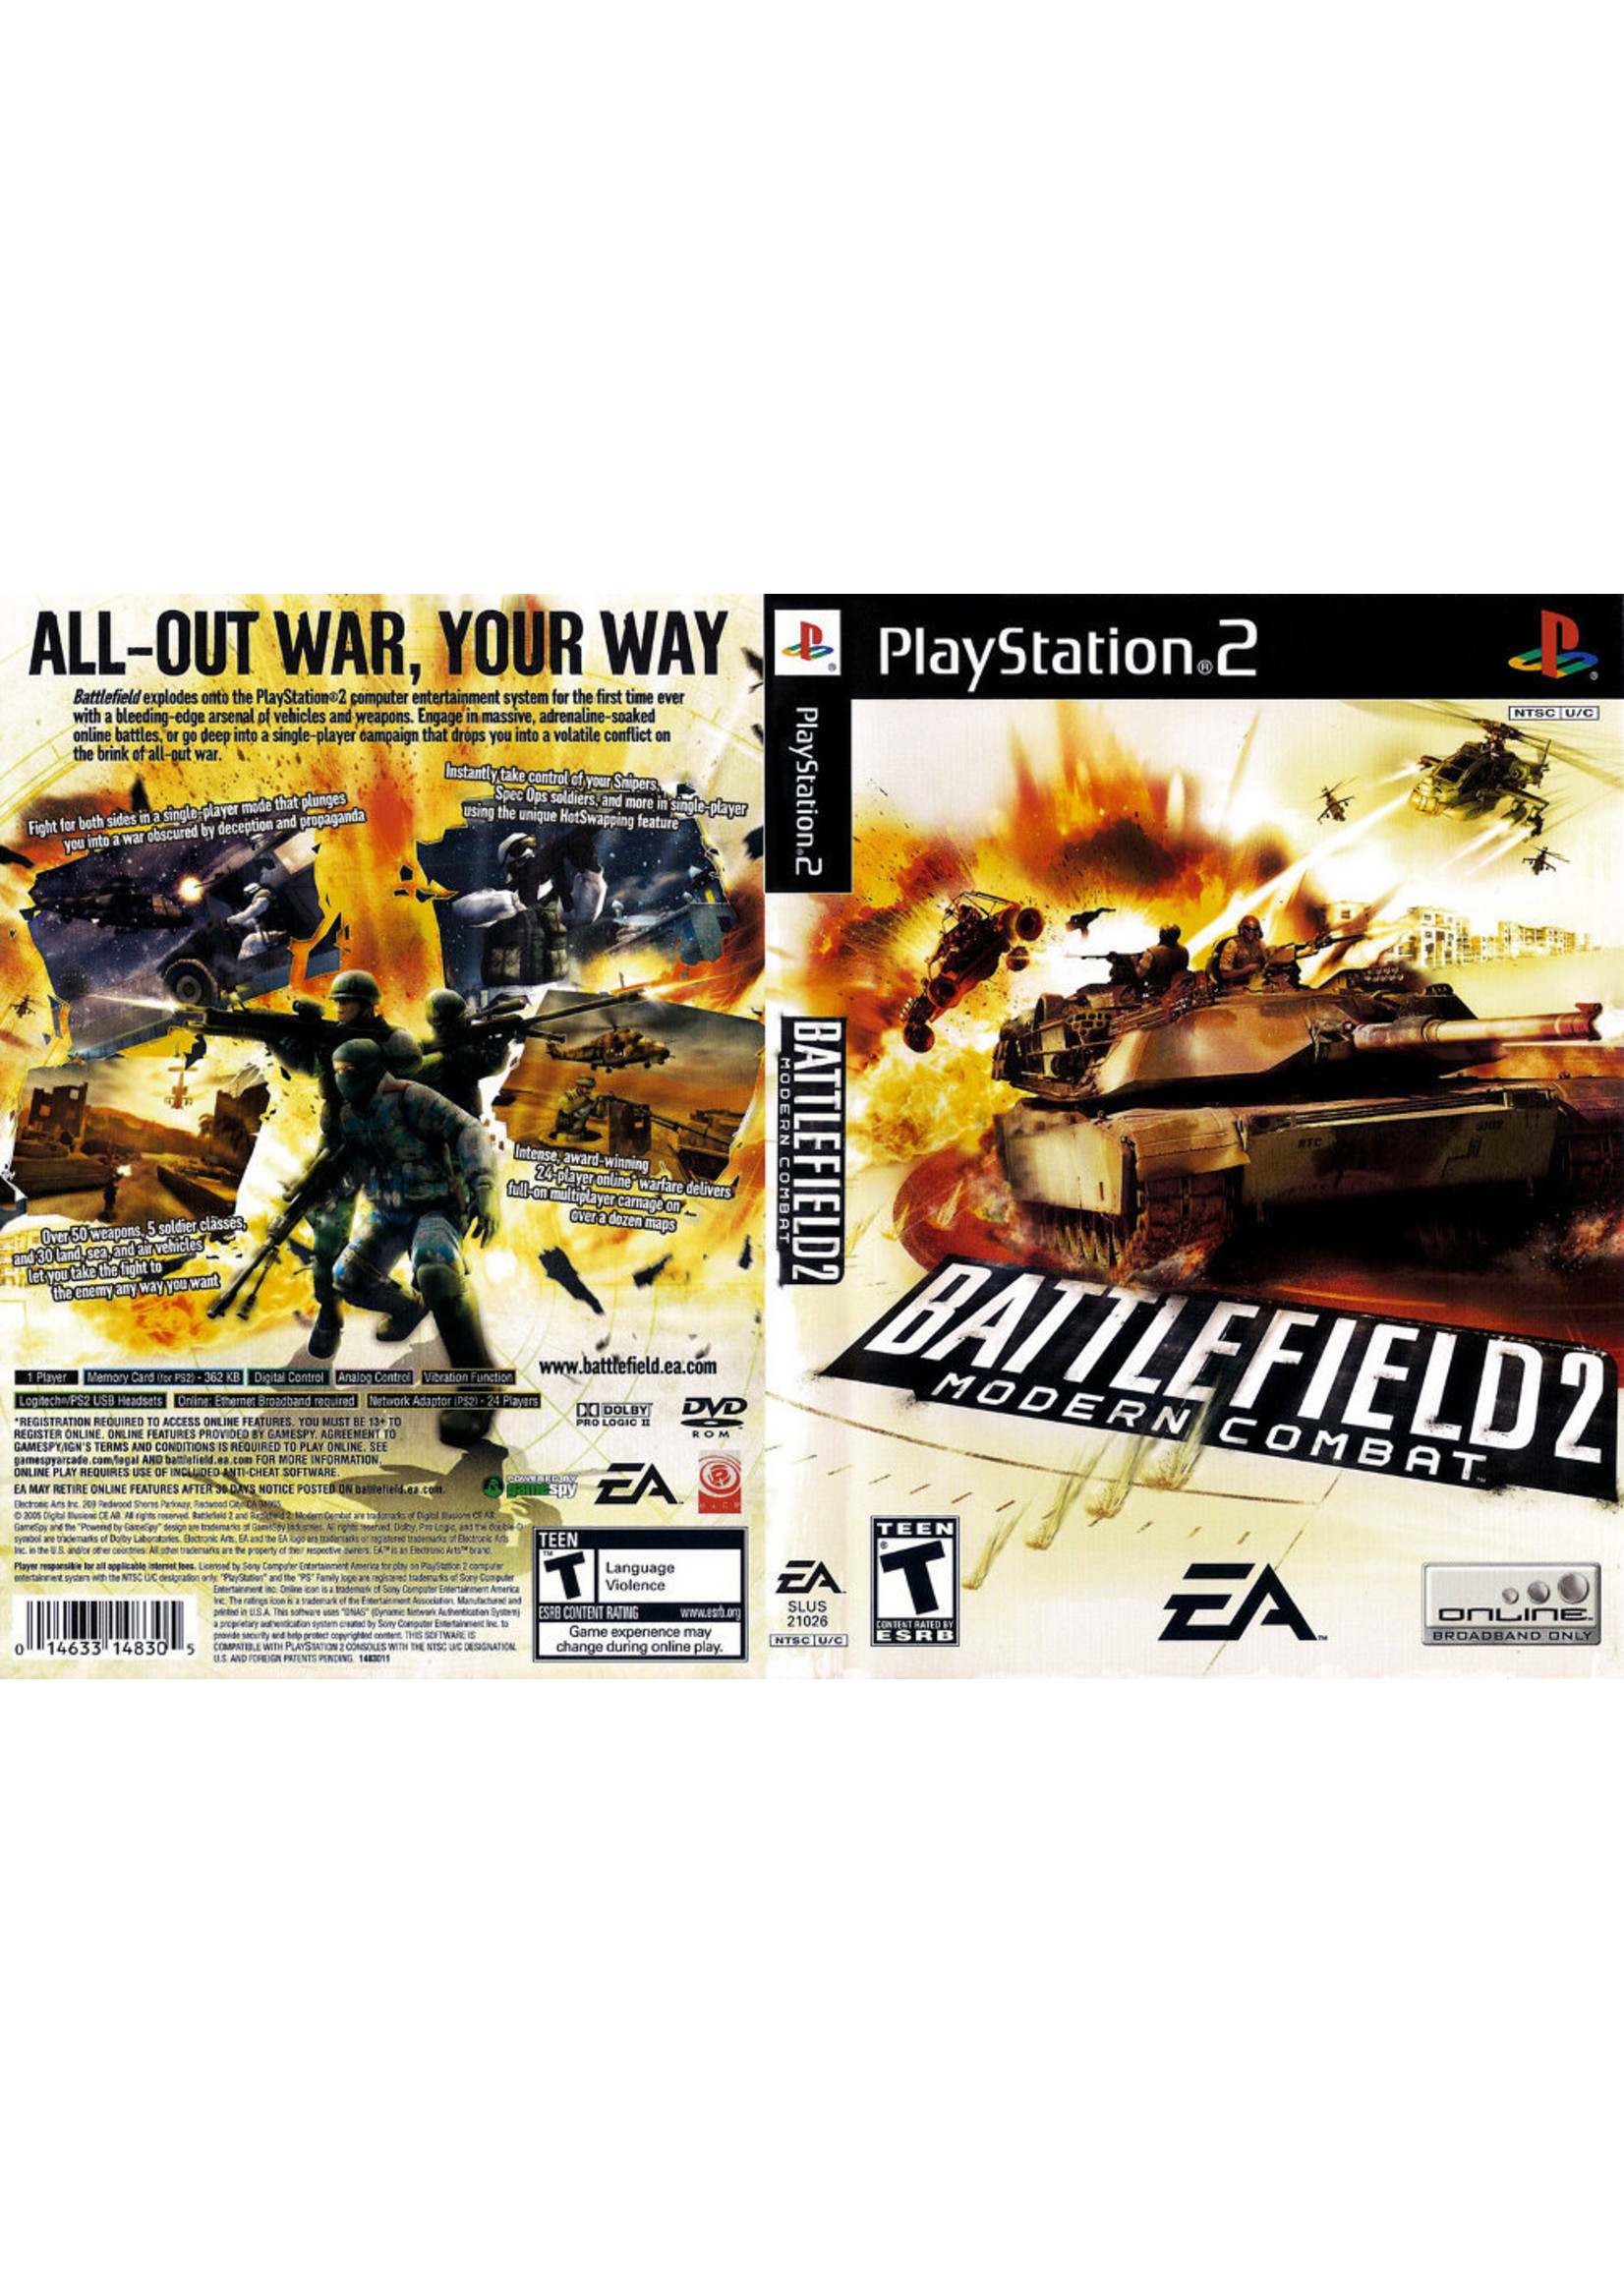 Sony Playstation 2 (PS2) Battlefield 2 Modern Combat